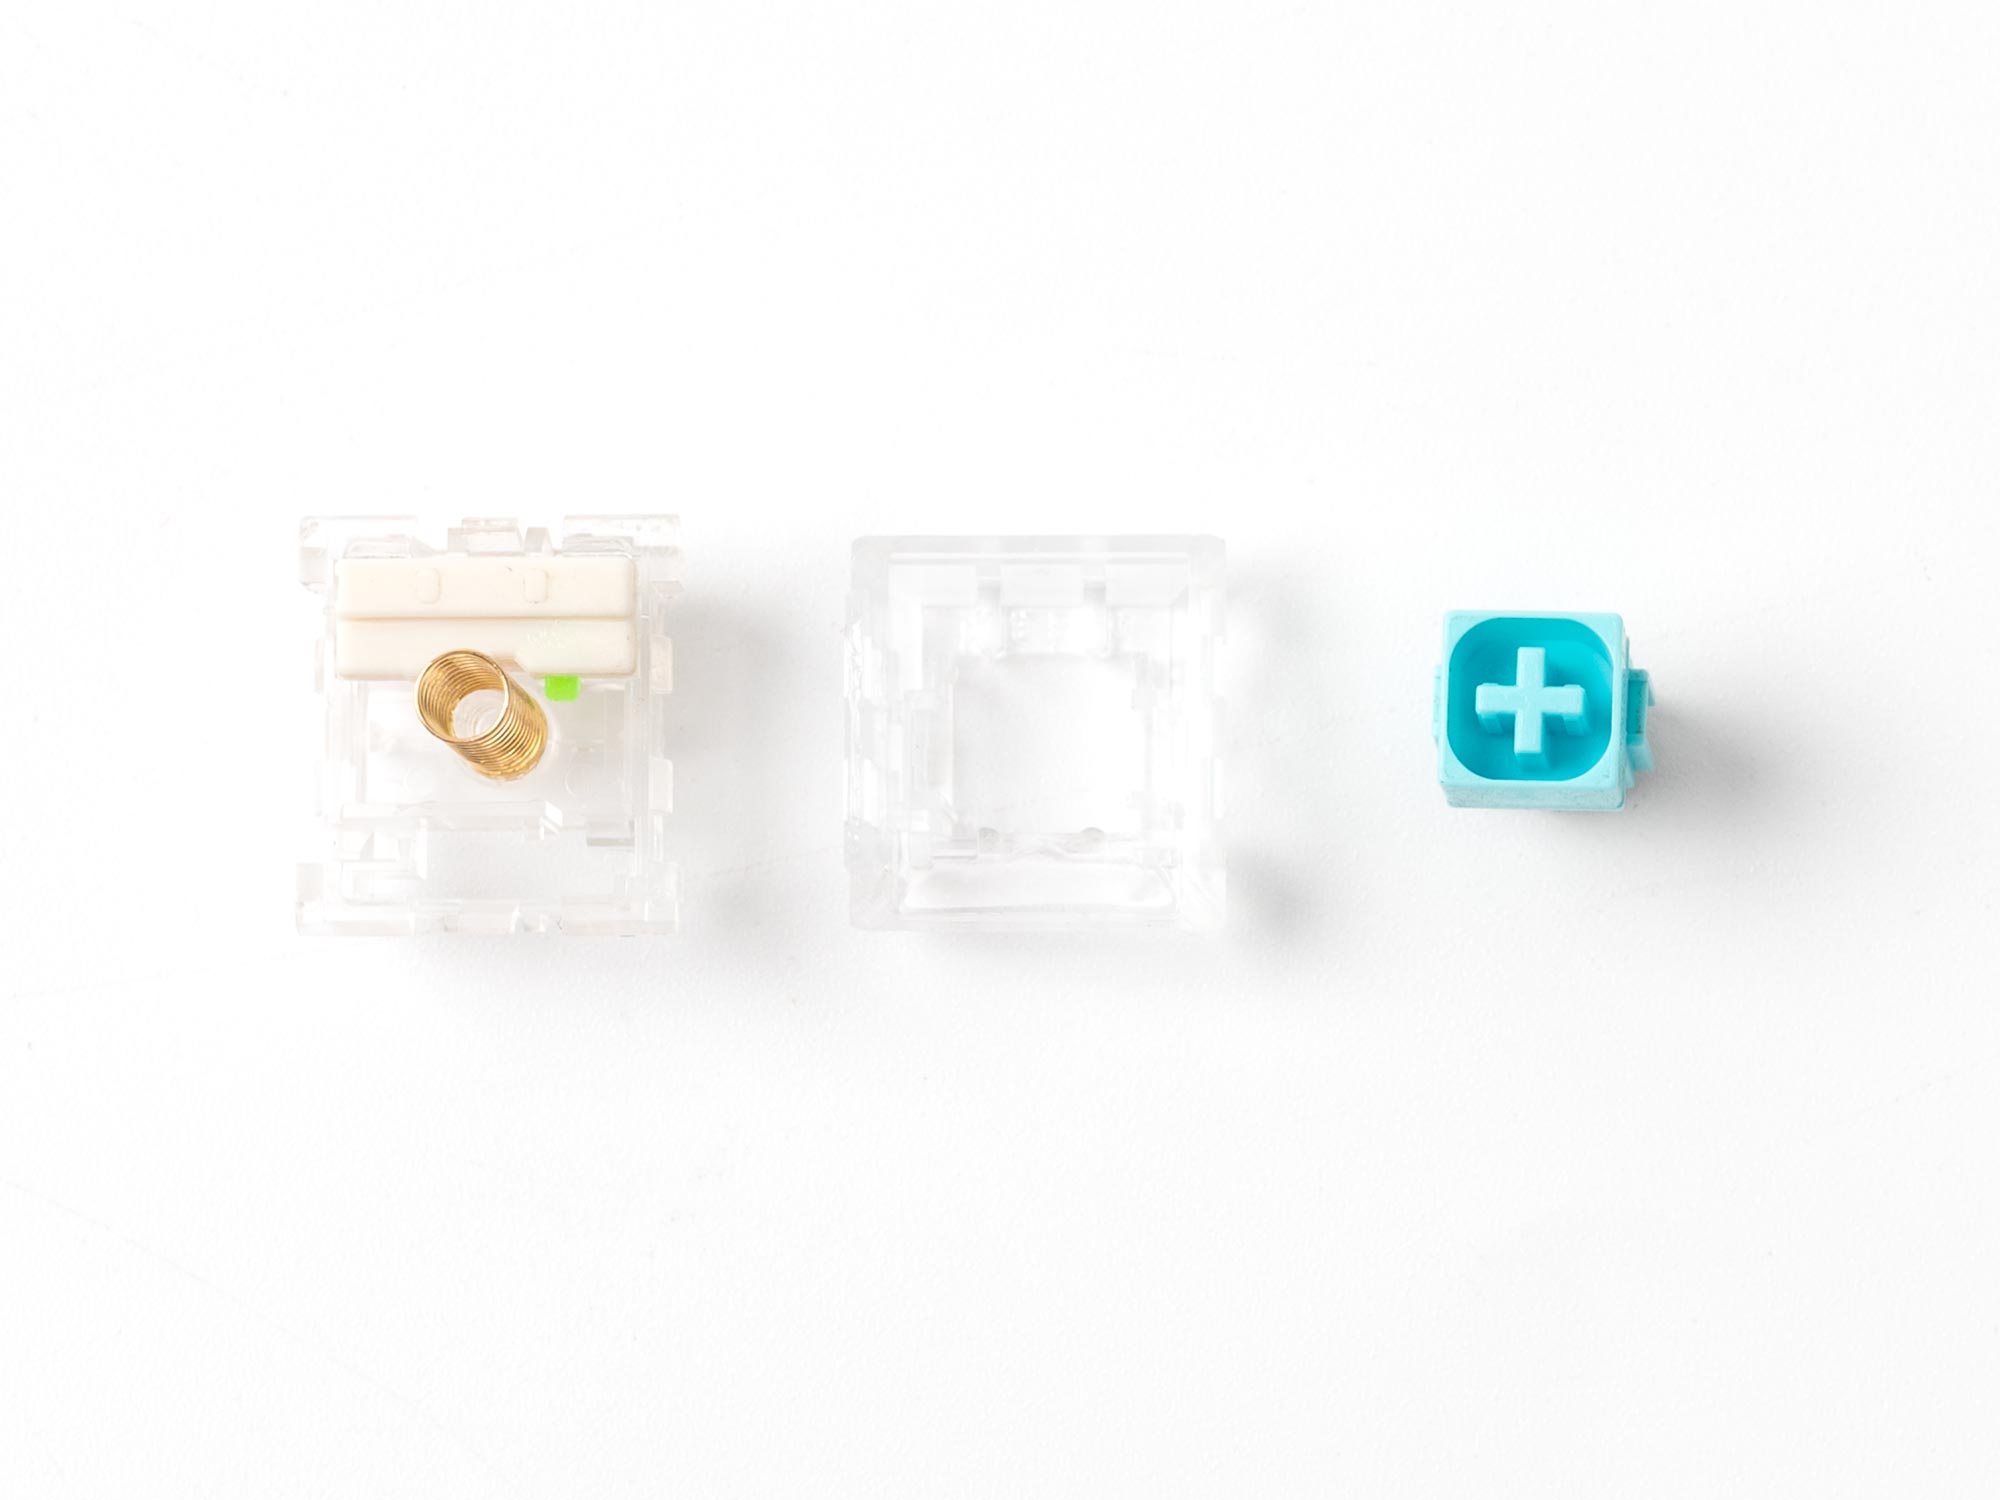 Kailh Crystal Robin Box Switch “Box” Design